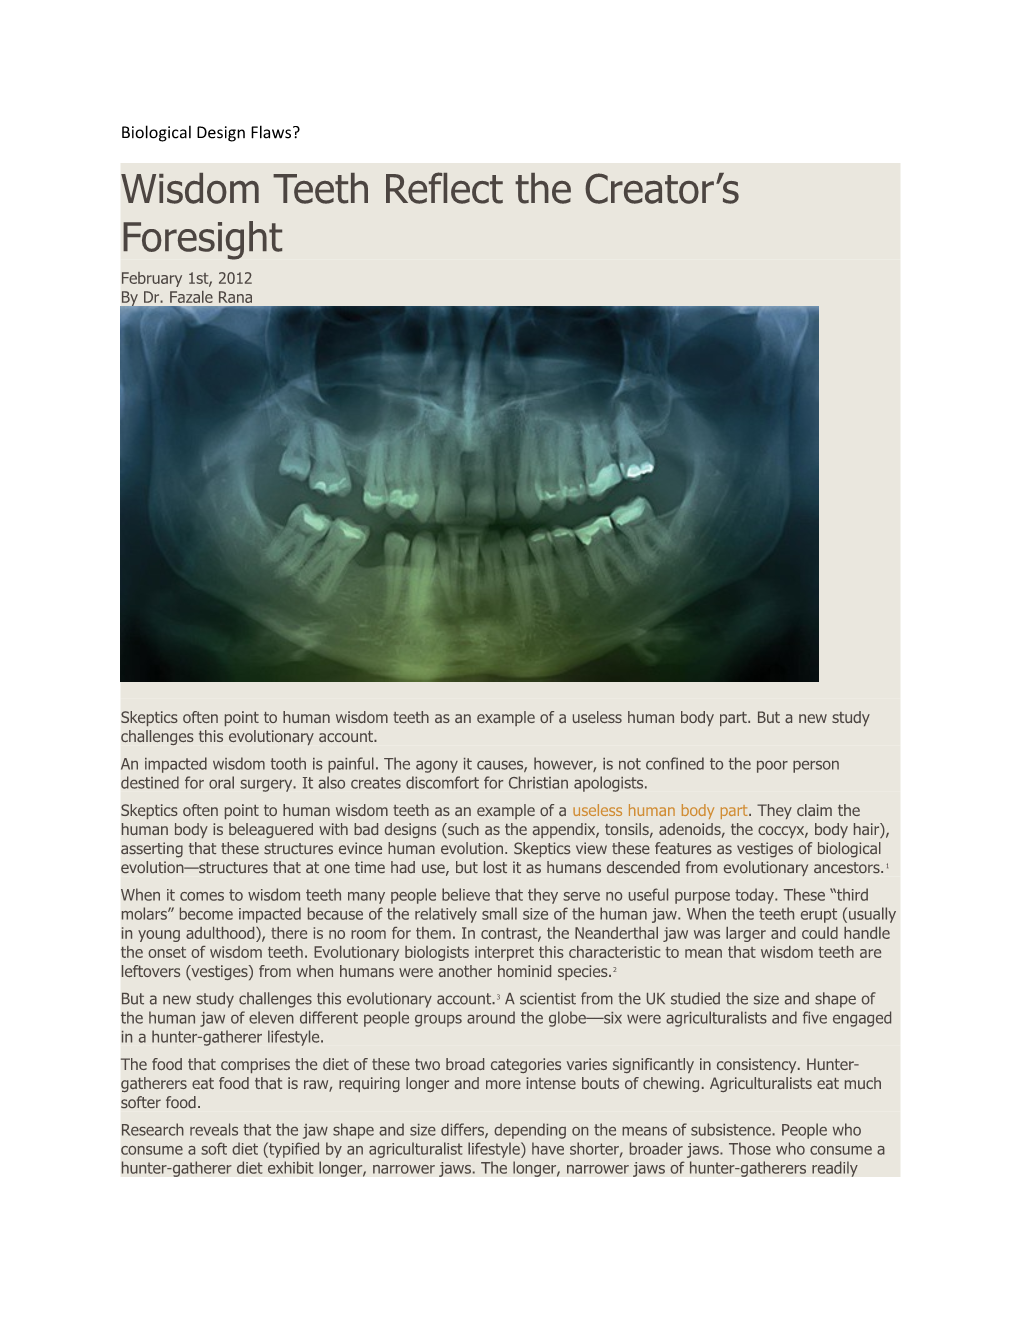 Wisdom Teeth Reflect the Creator S Foresight